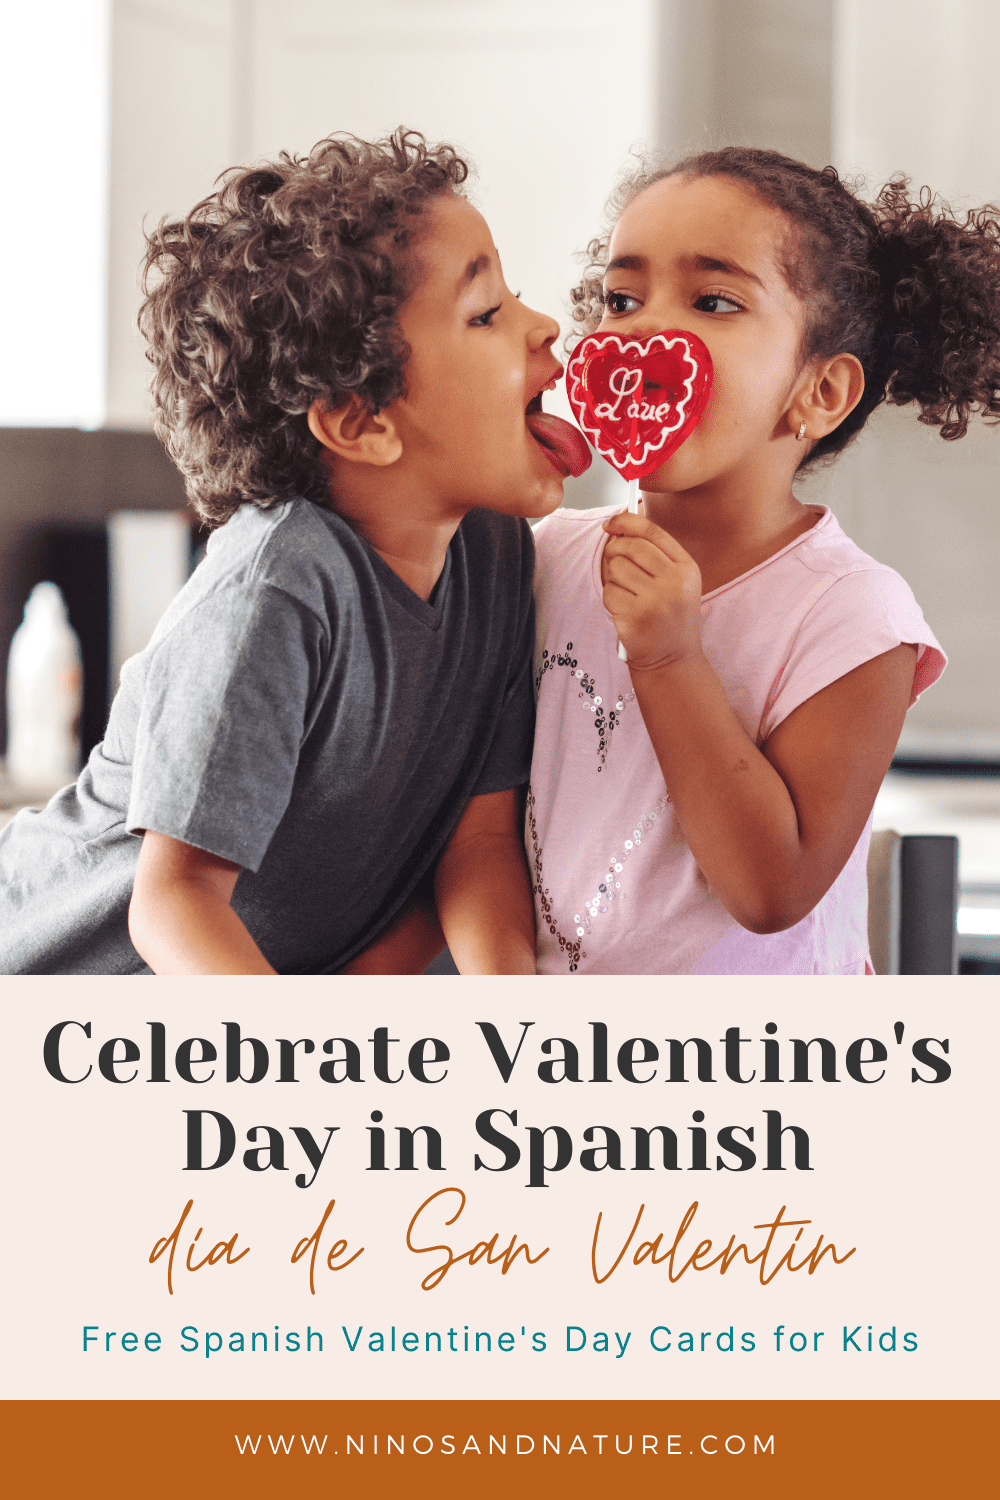 free-spanish-valentine-s-day-cards-for-kids-celebrate-valentine-s-day